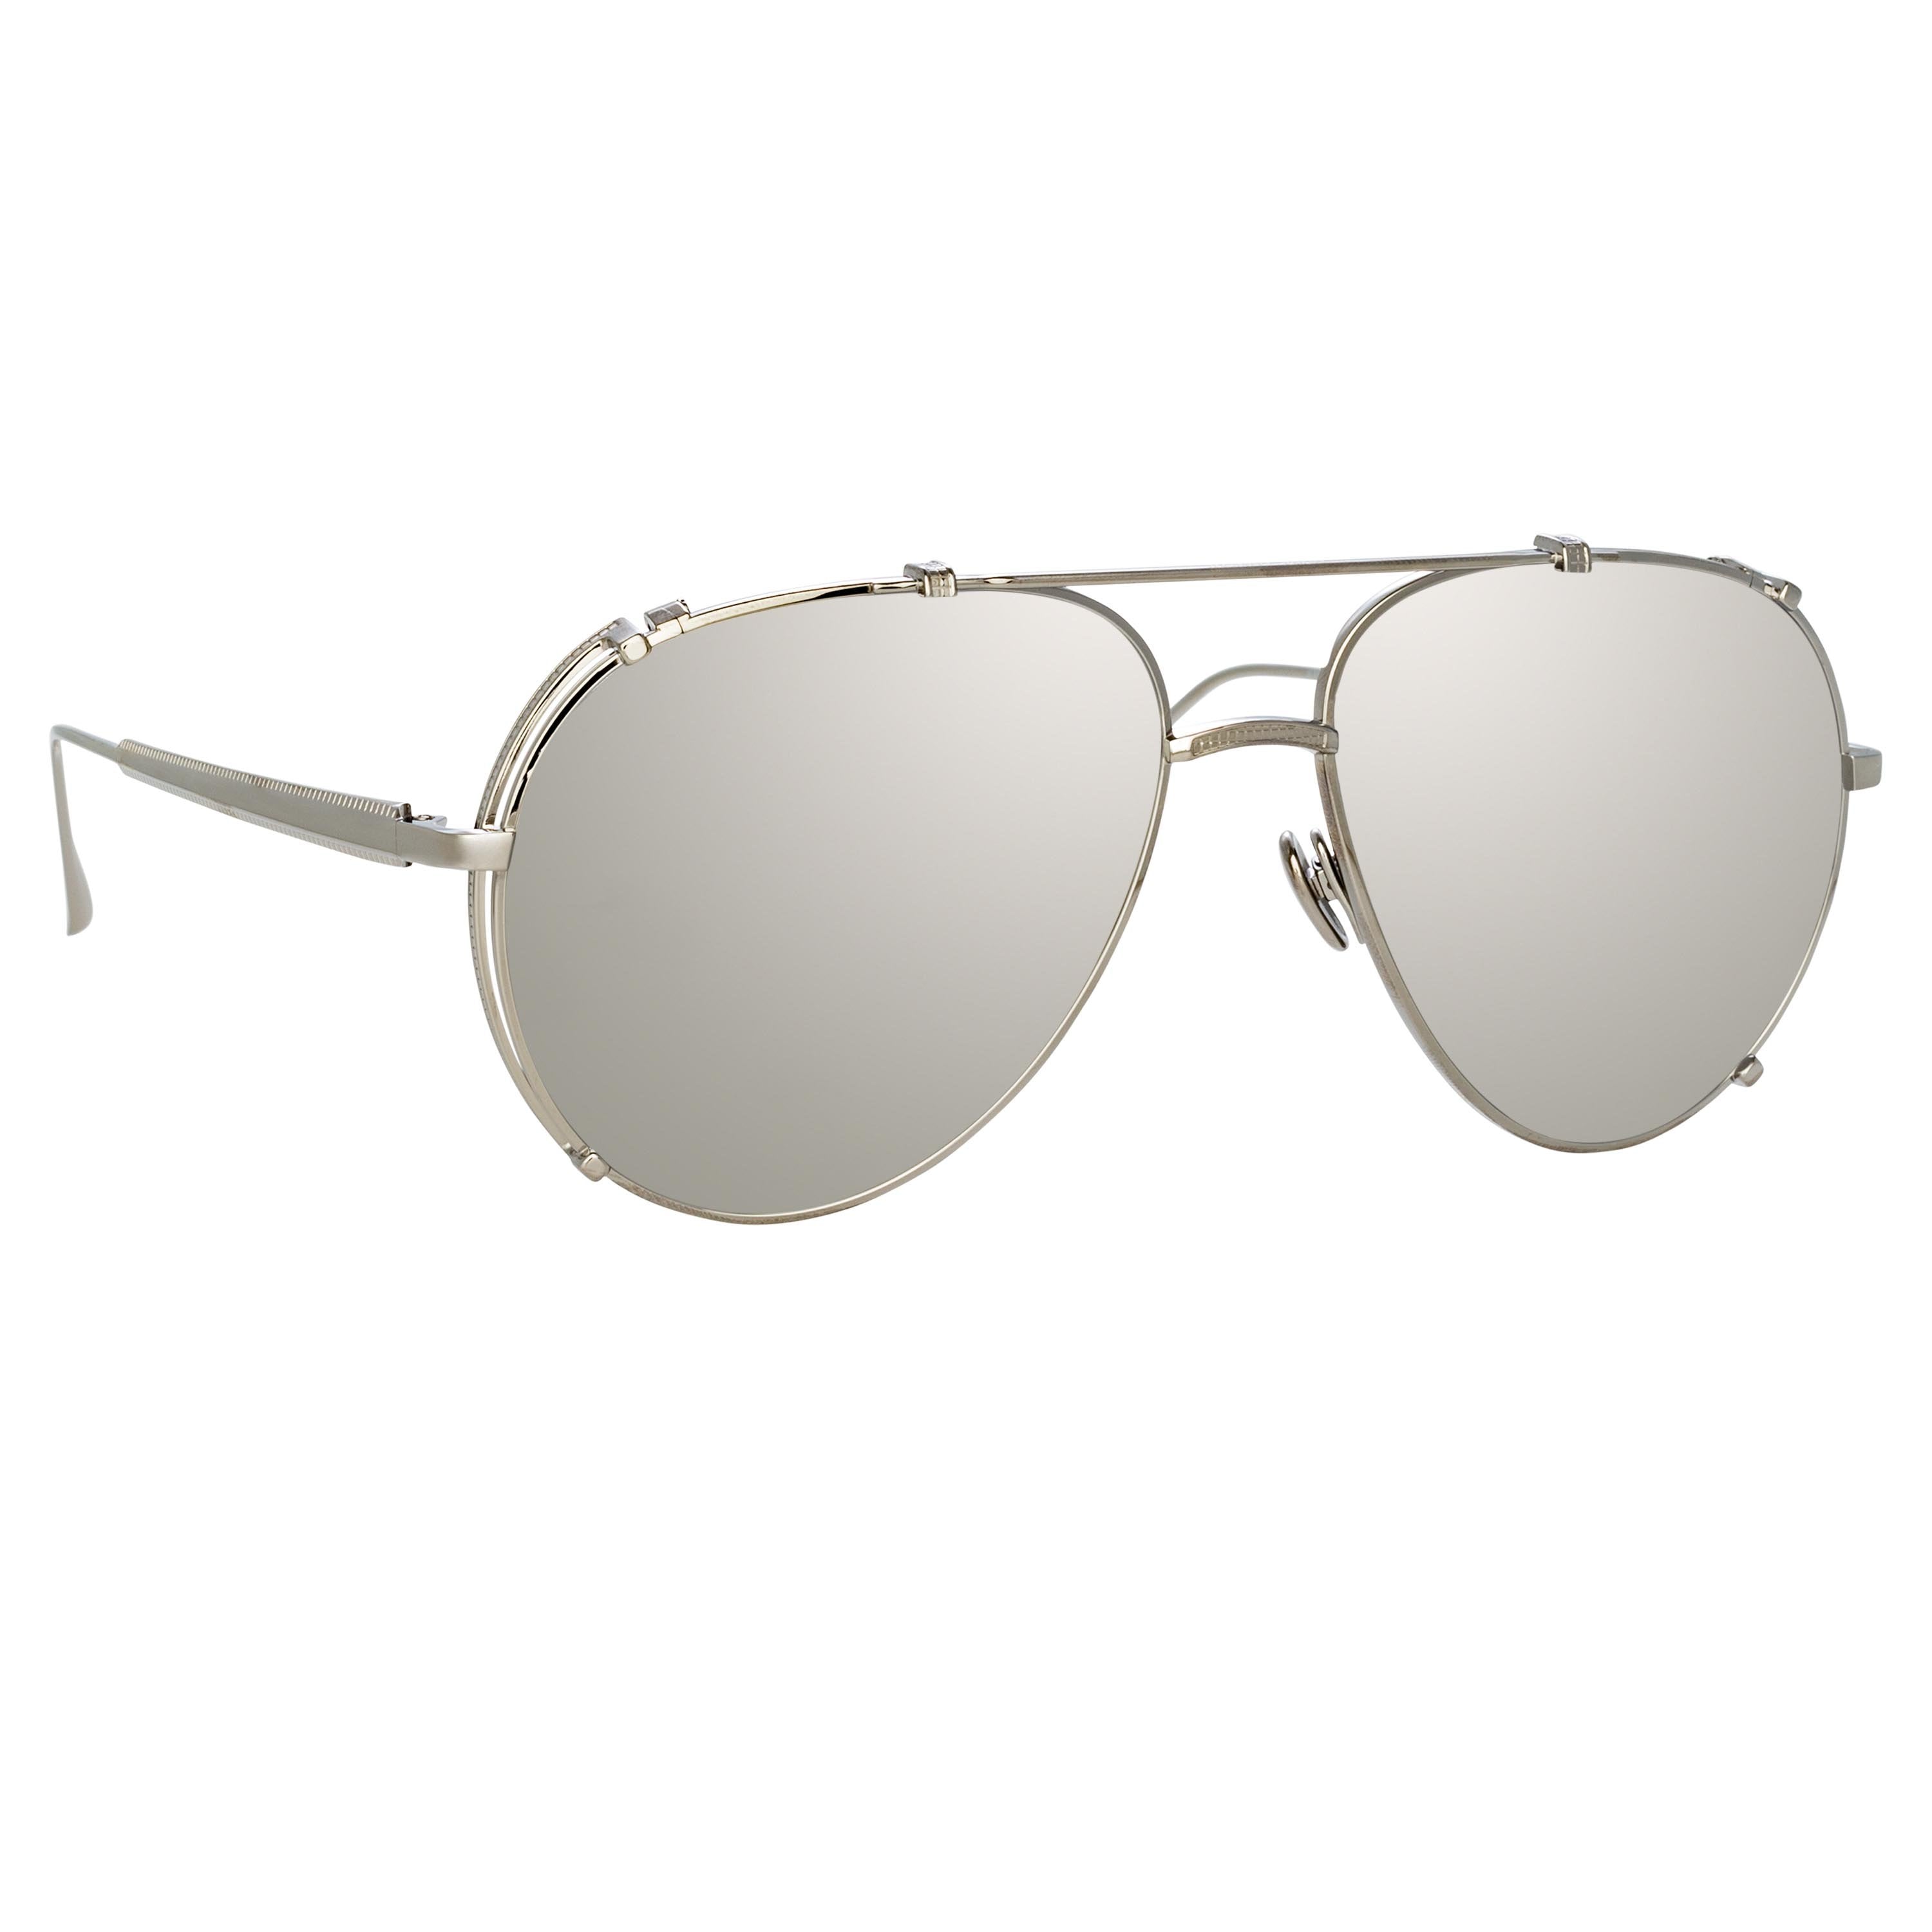 Maverick Aviator Sunglasses in Nickel by LINDA FARROW – LINDA